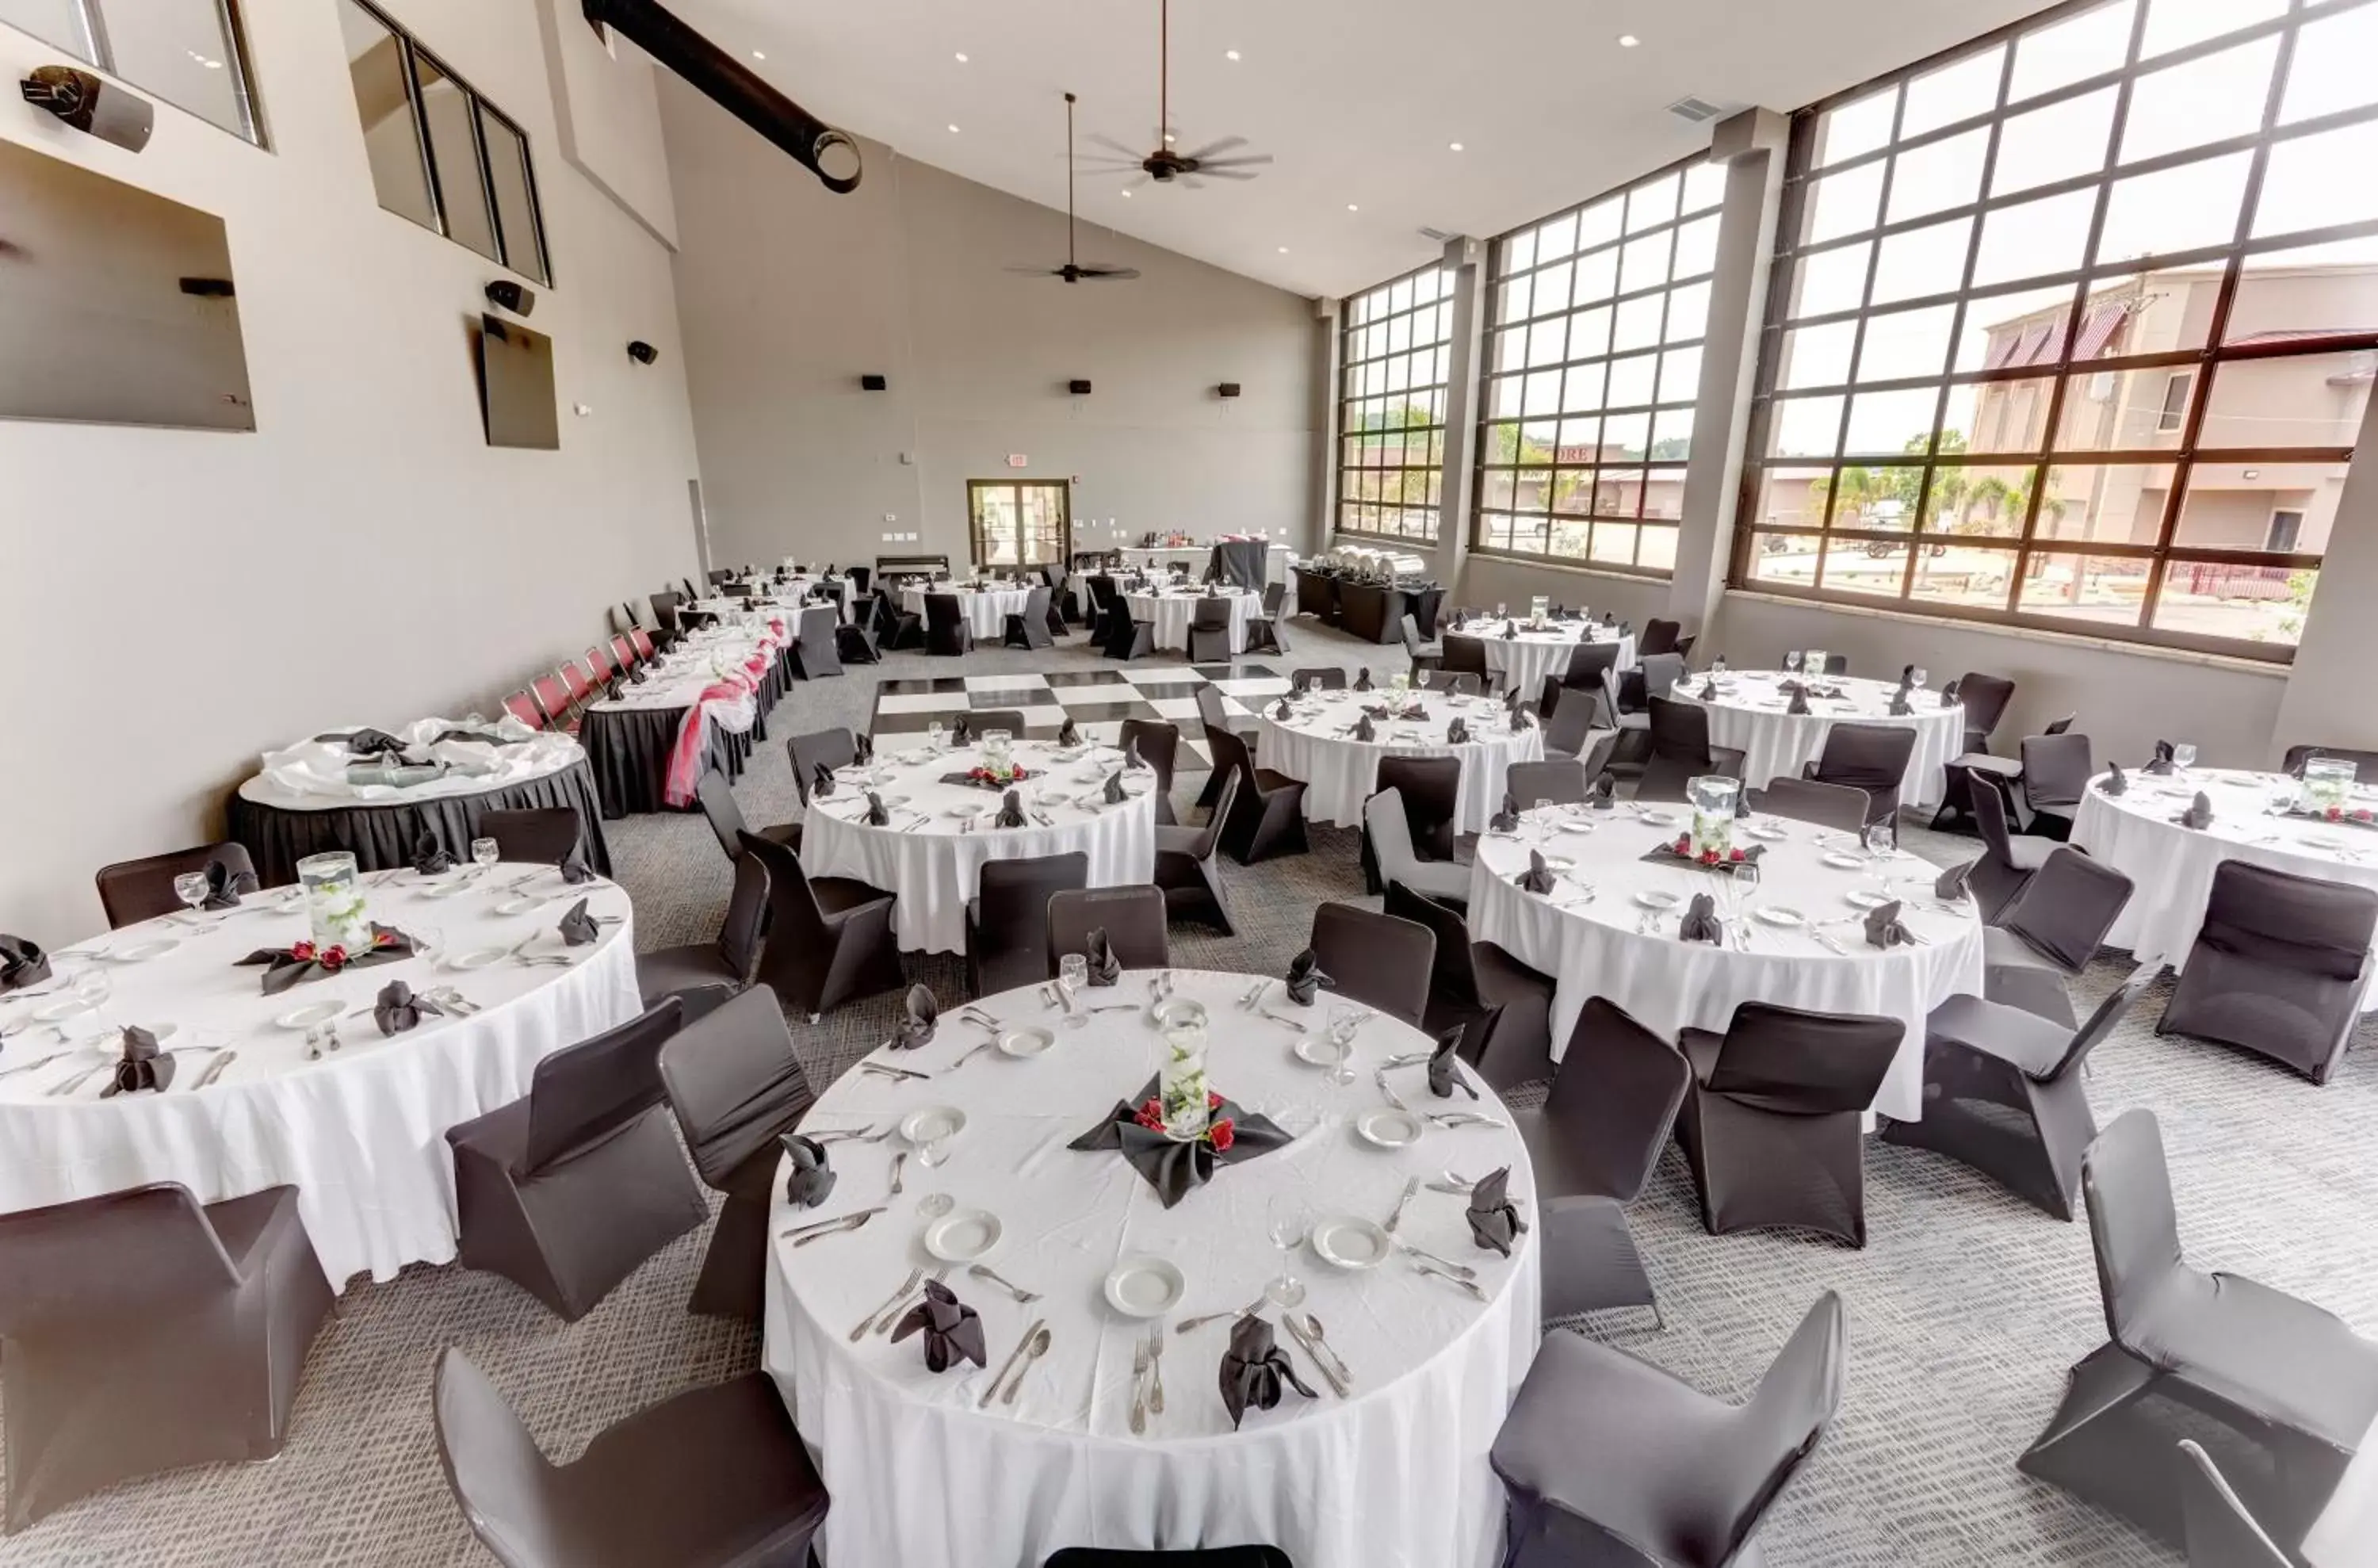 Banquet/Function facilities, Banquet Facilities in The Resort at Lake of the Ozarks